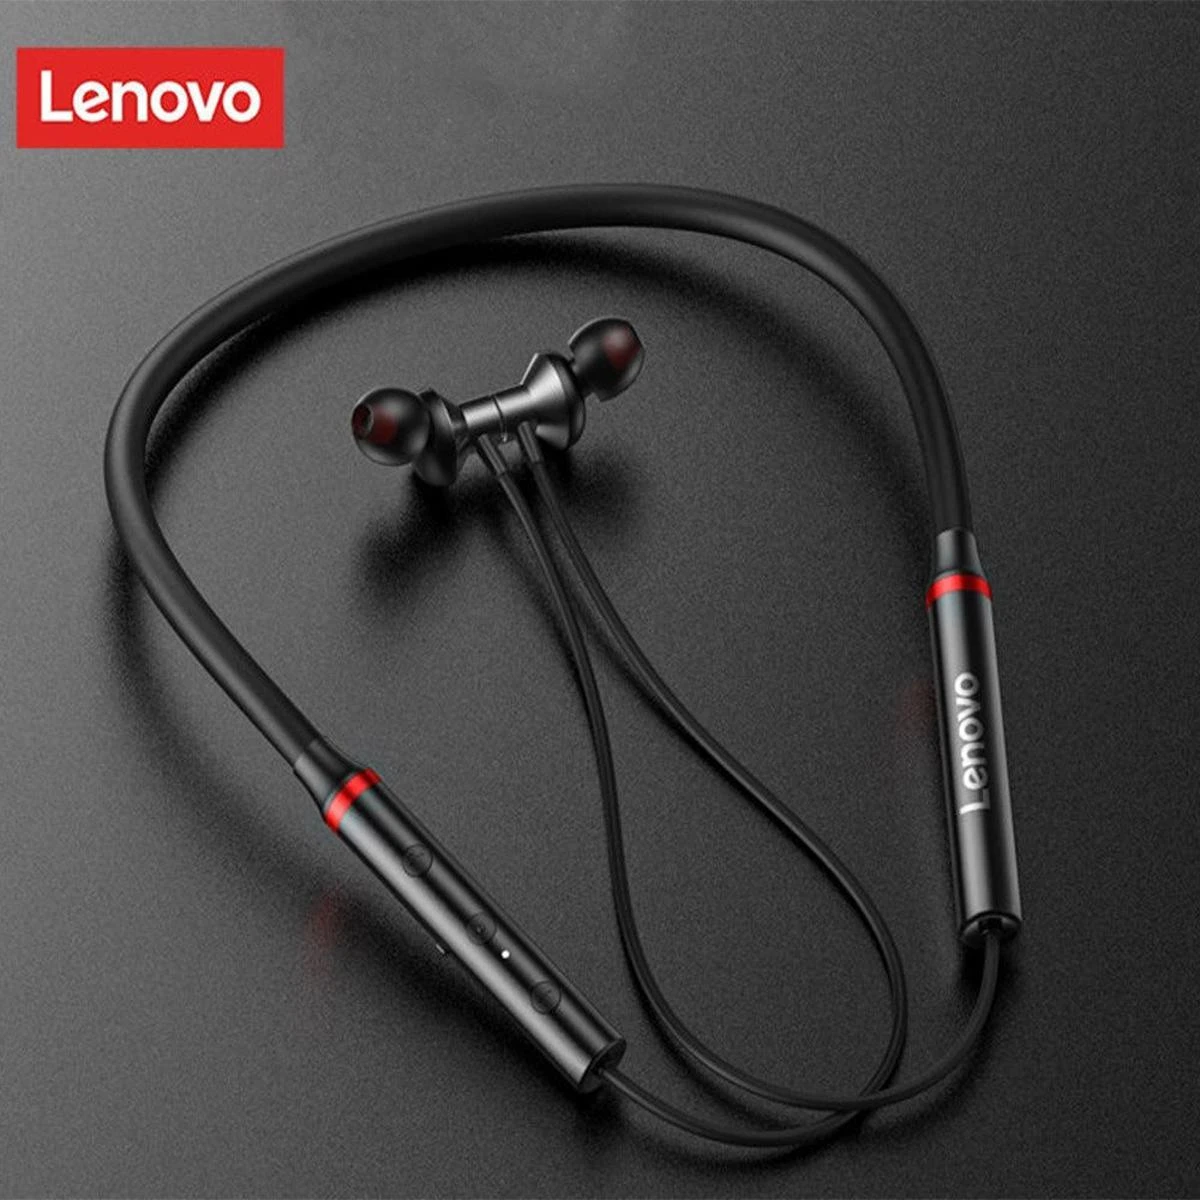 Lenovo HE05 Upgraded Version Bluetooth 5.0 IPX5 Waterproof Neckband Wireless Earphone